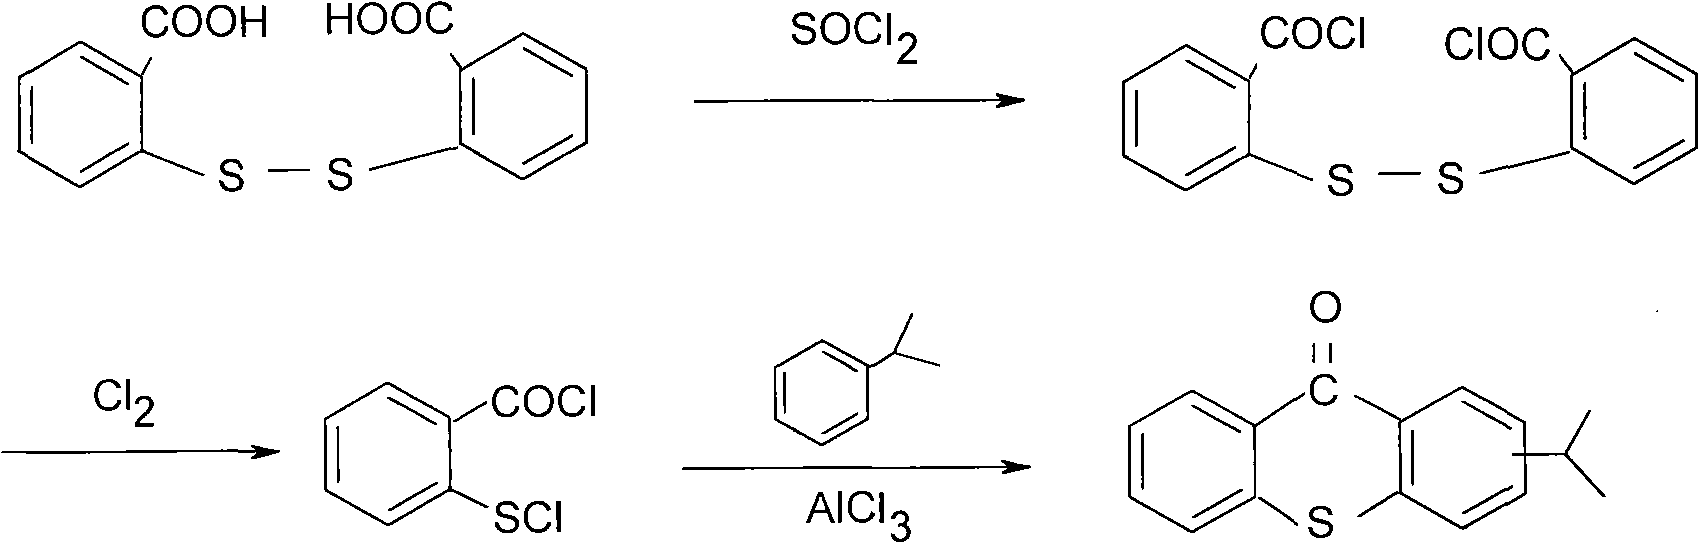 Preparation process of 2-isopropylthioxanthone